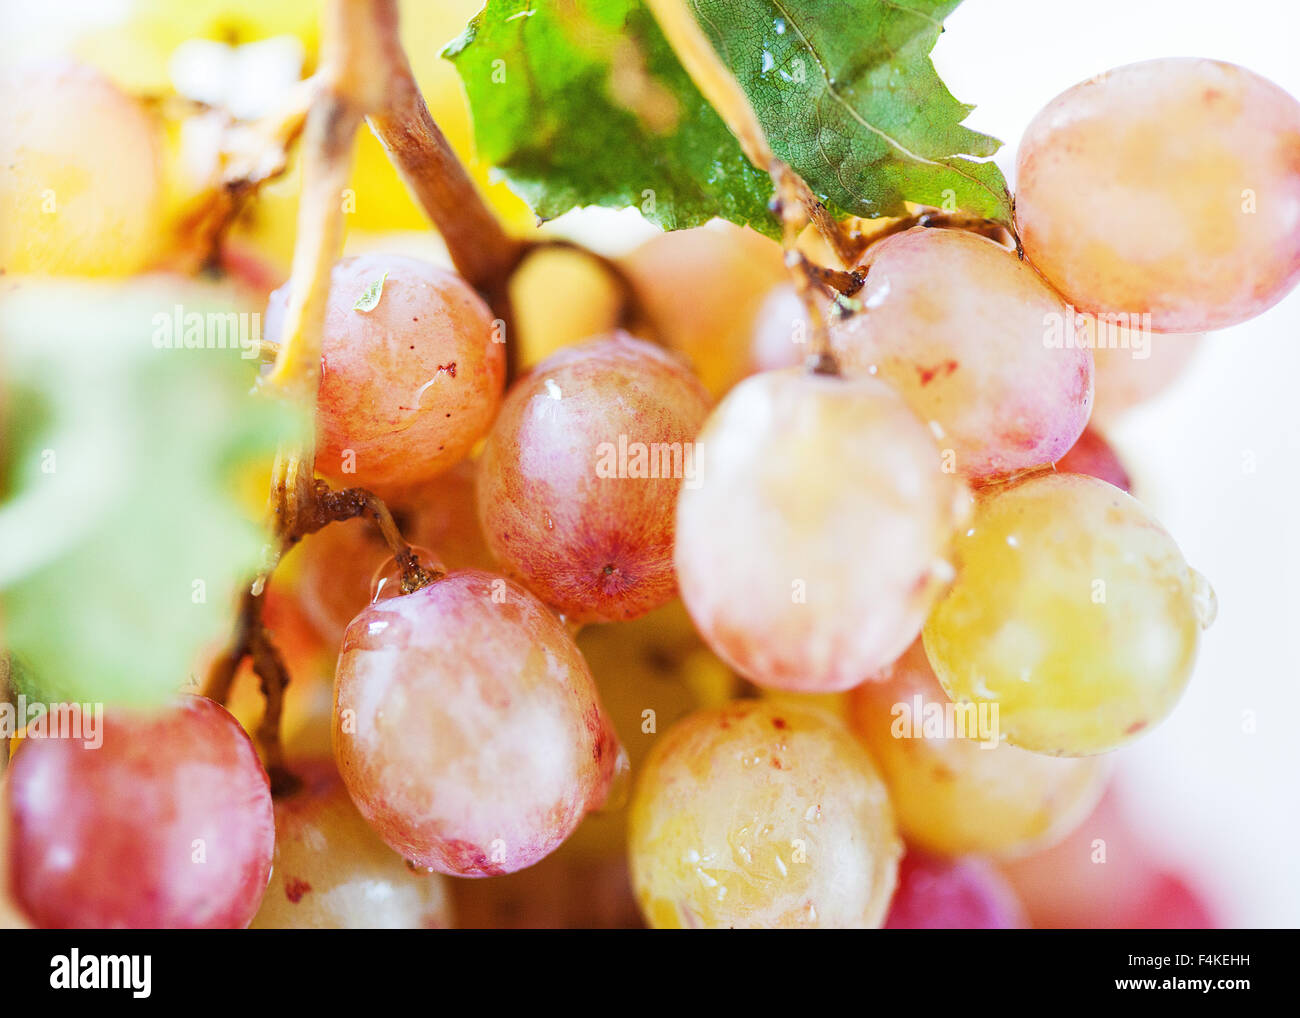 Organic grapes on the vine Stock Photo